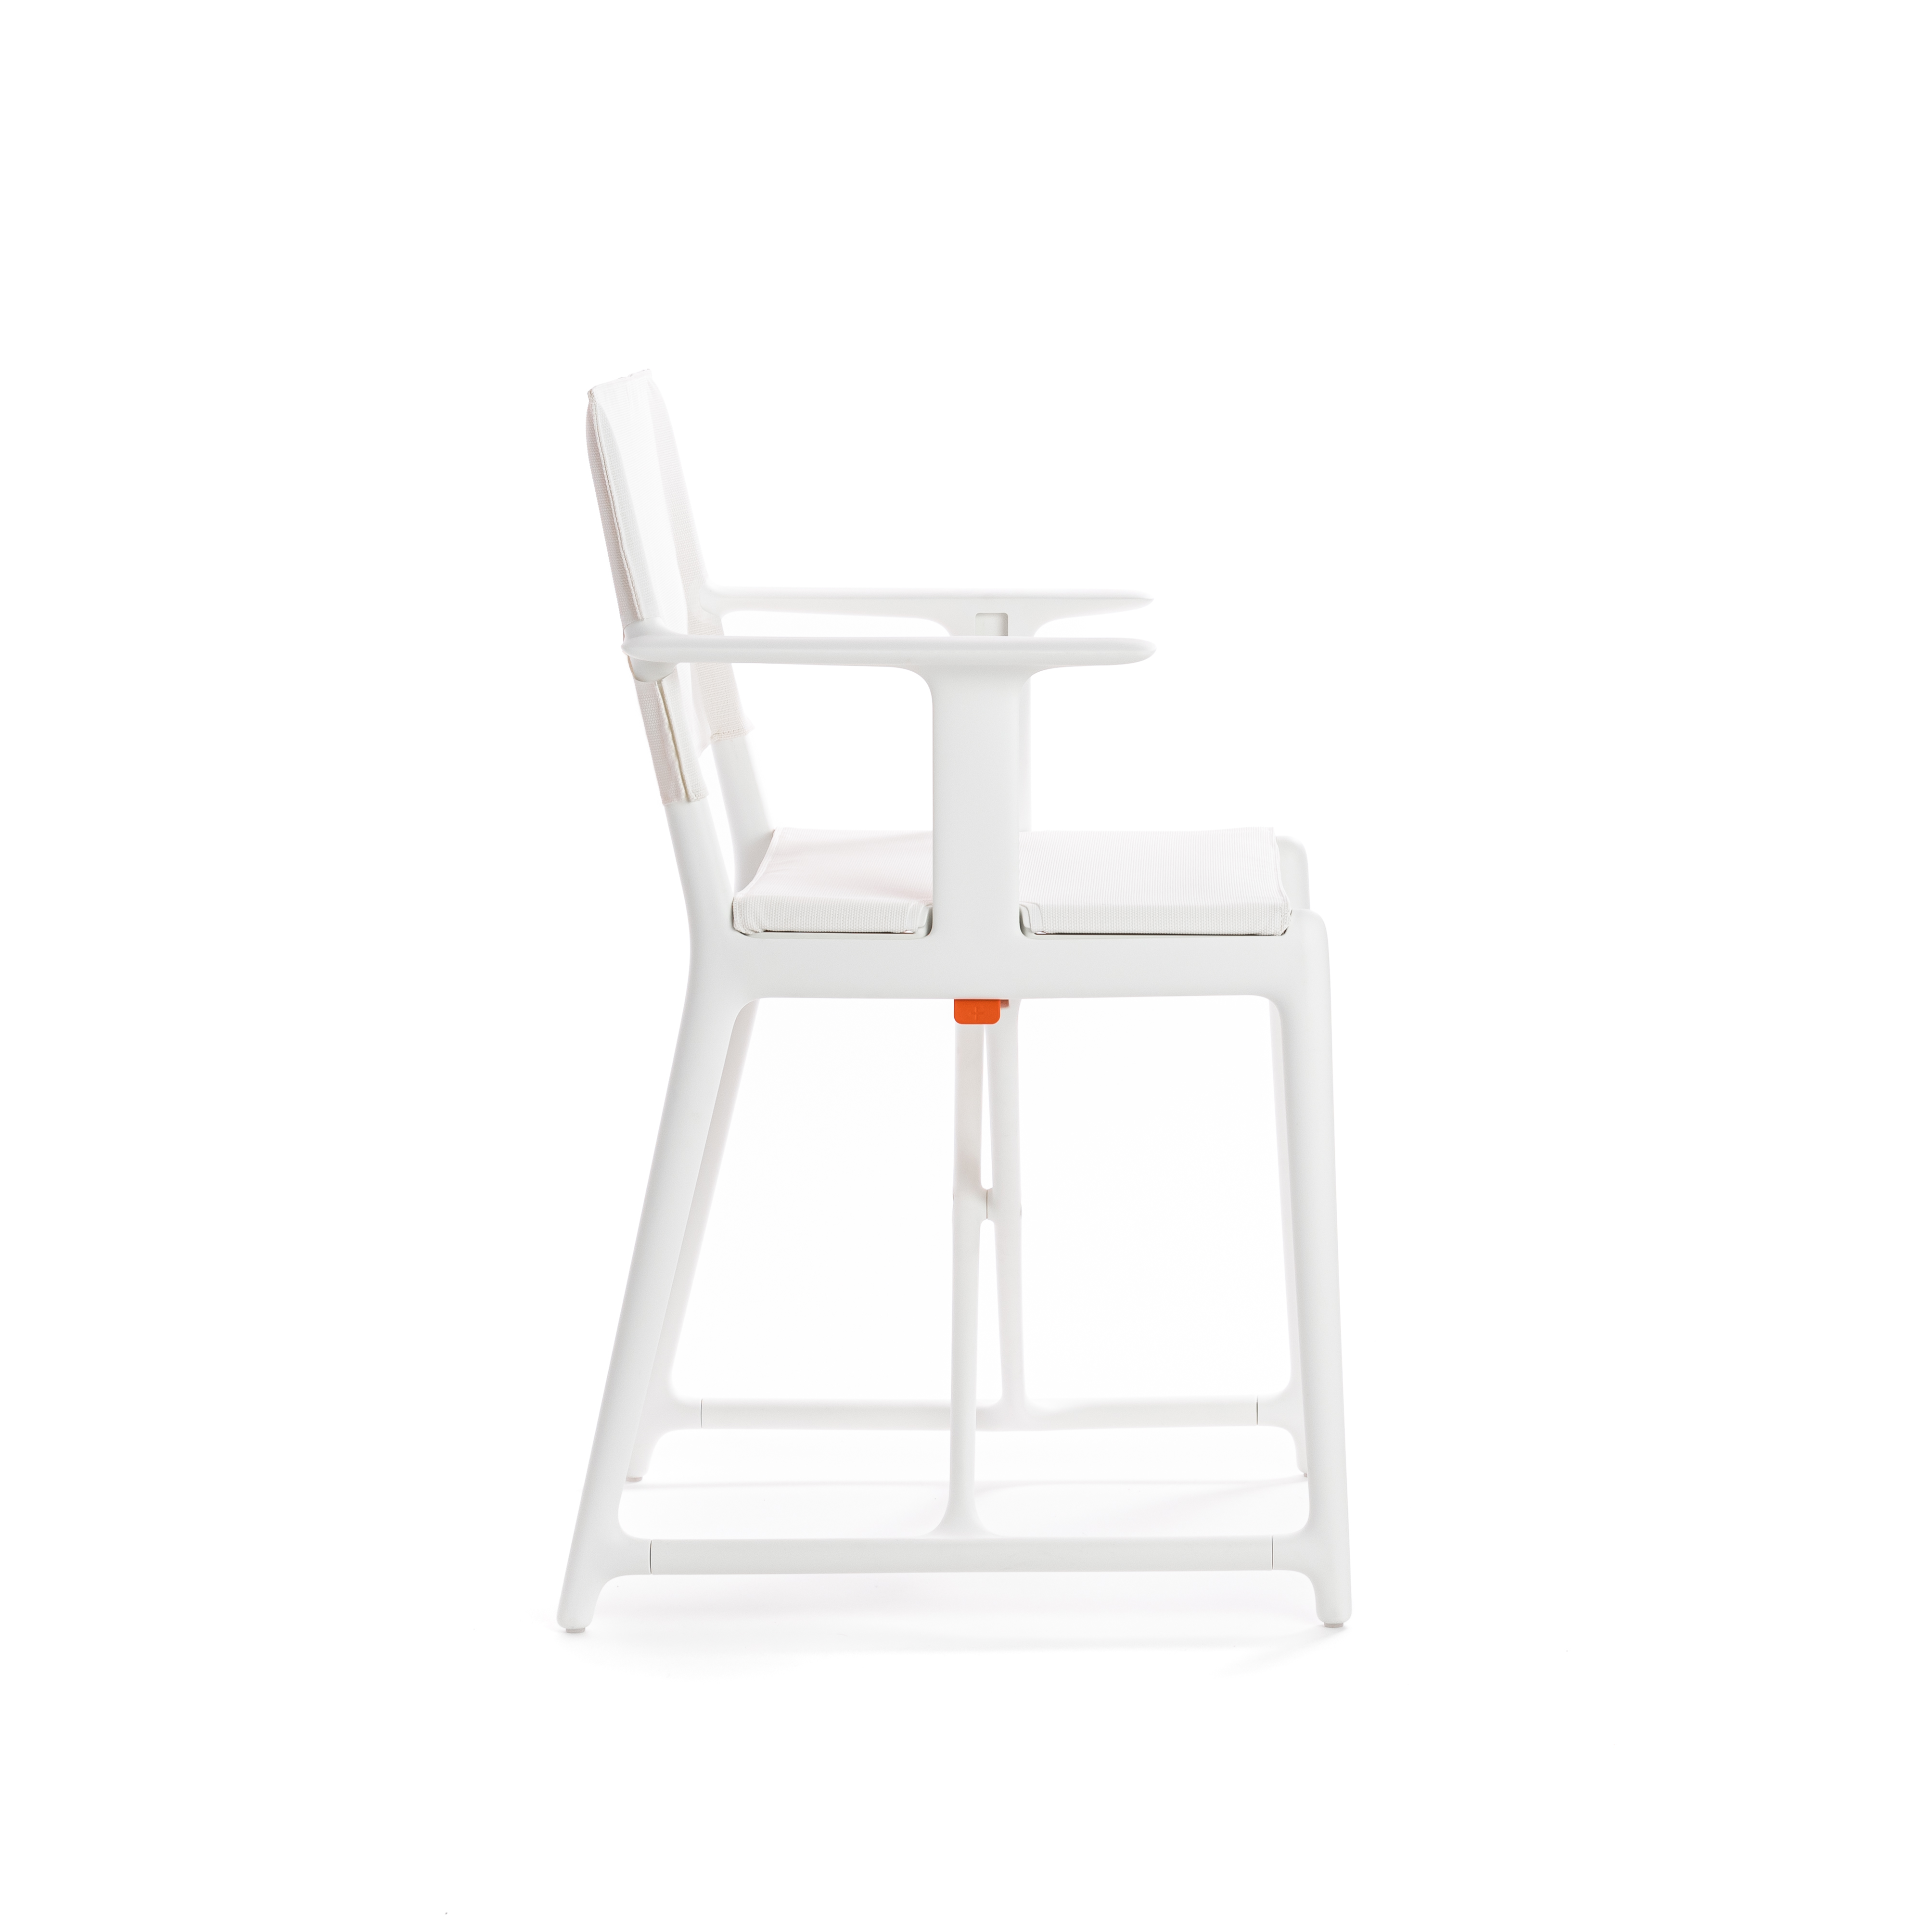 https://www.magisdesign.com/wp-content/uploads/2020/03/Magis_stanley_folding_chair_product_side_SD1930_white_thinny_new_york_01.jpg